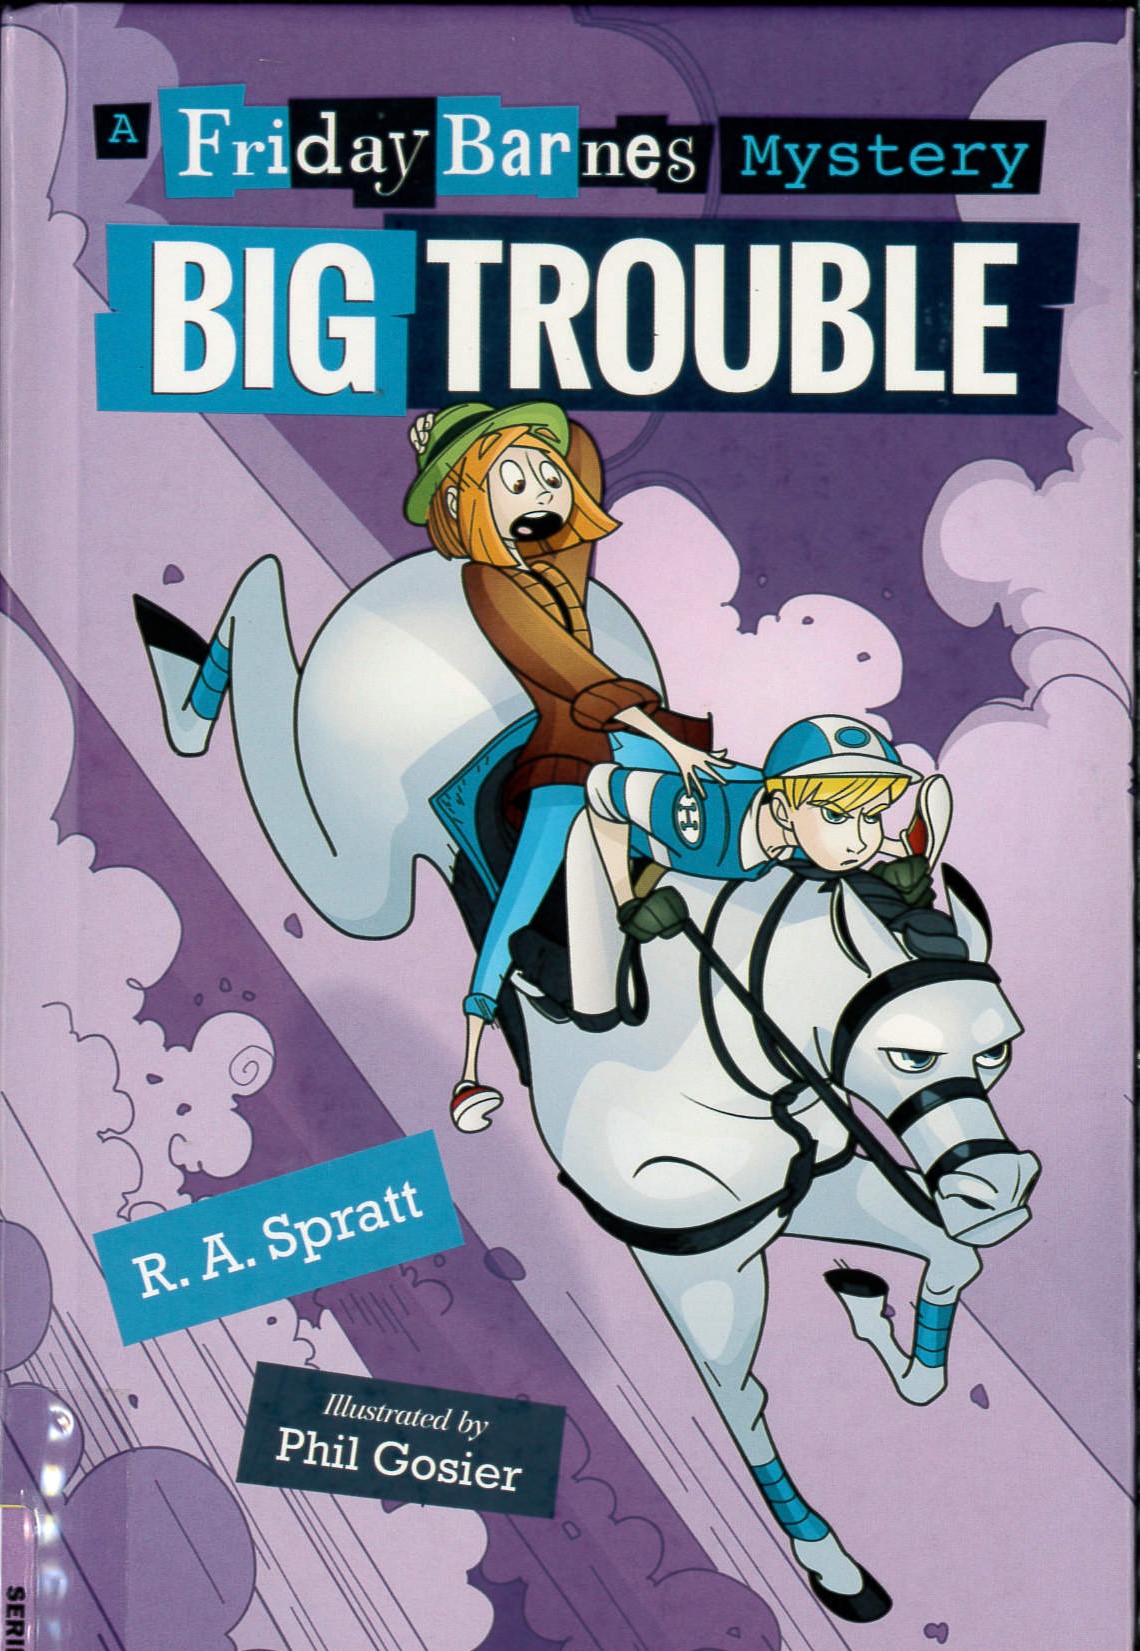 Big trouble : a Friday Barnes mystery /